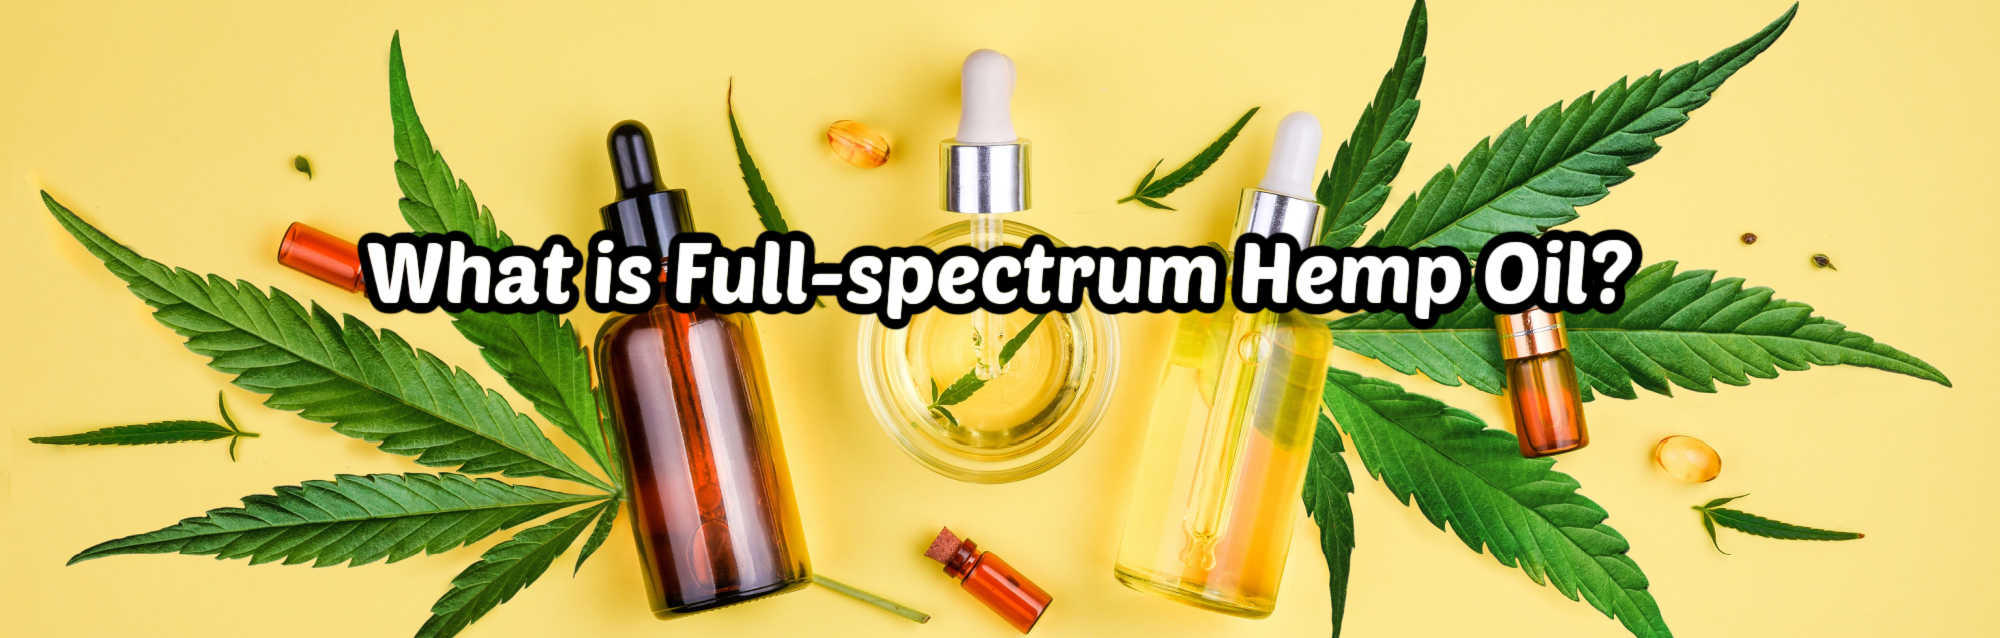 image of what is full spectrum hemp oil